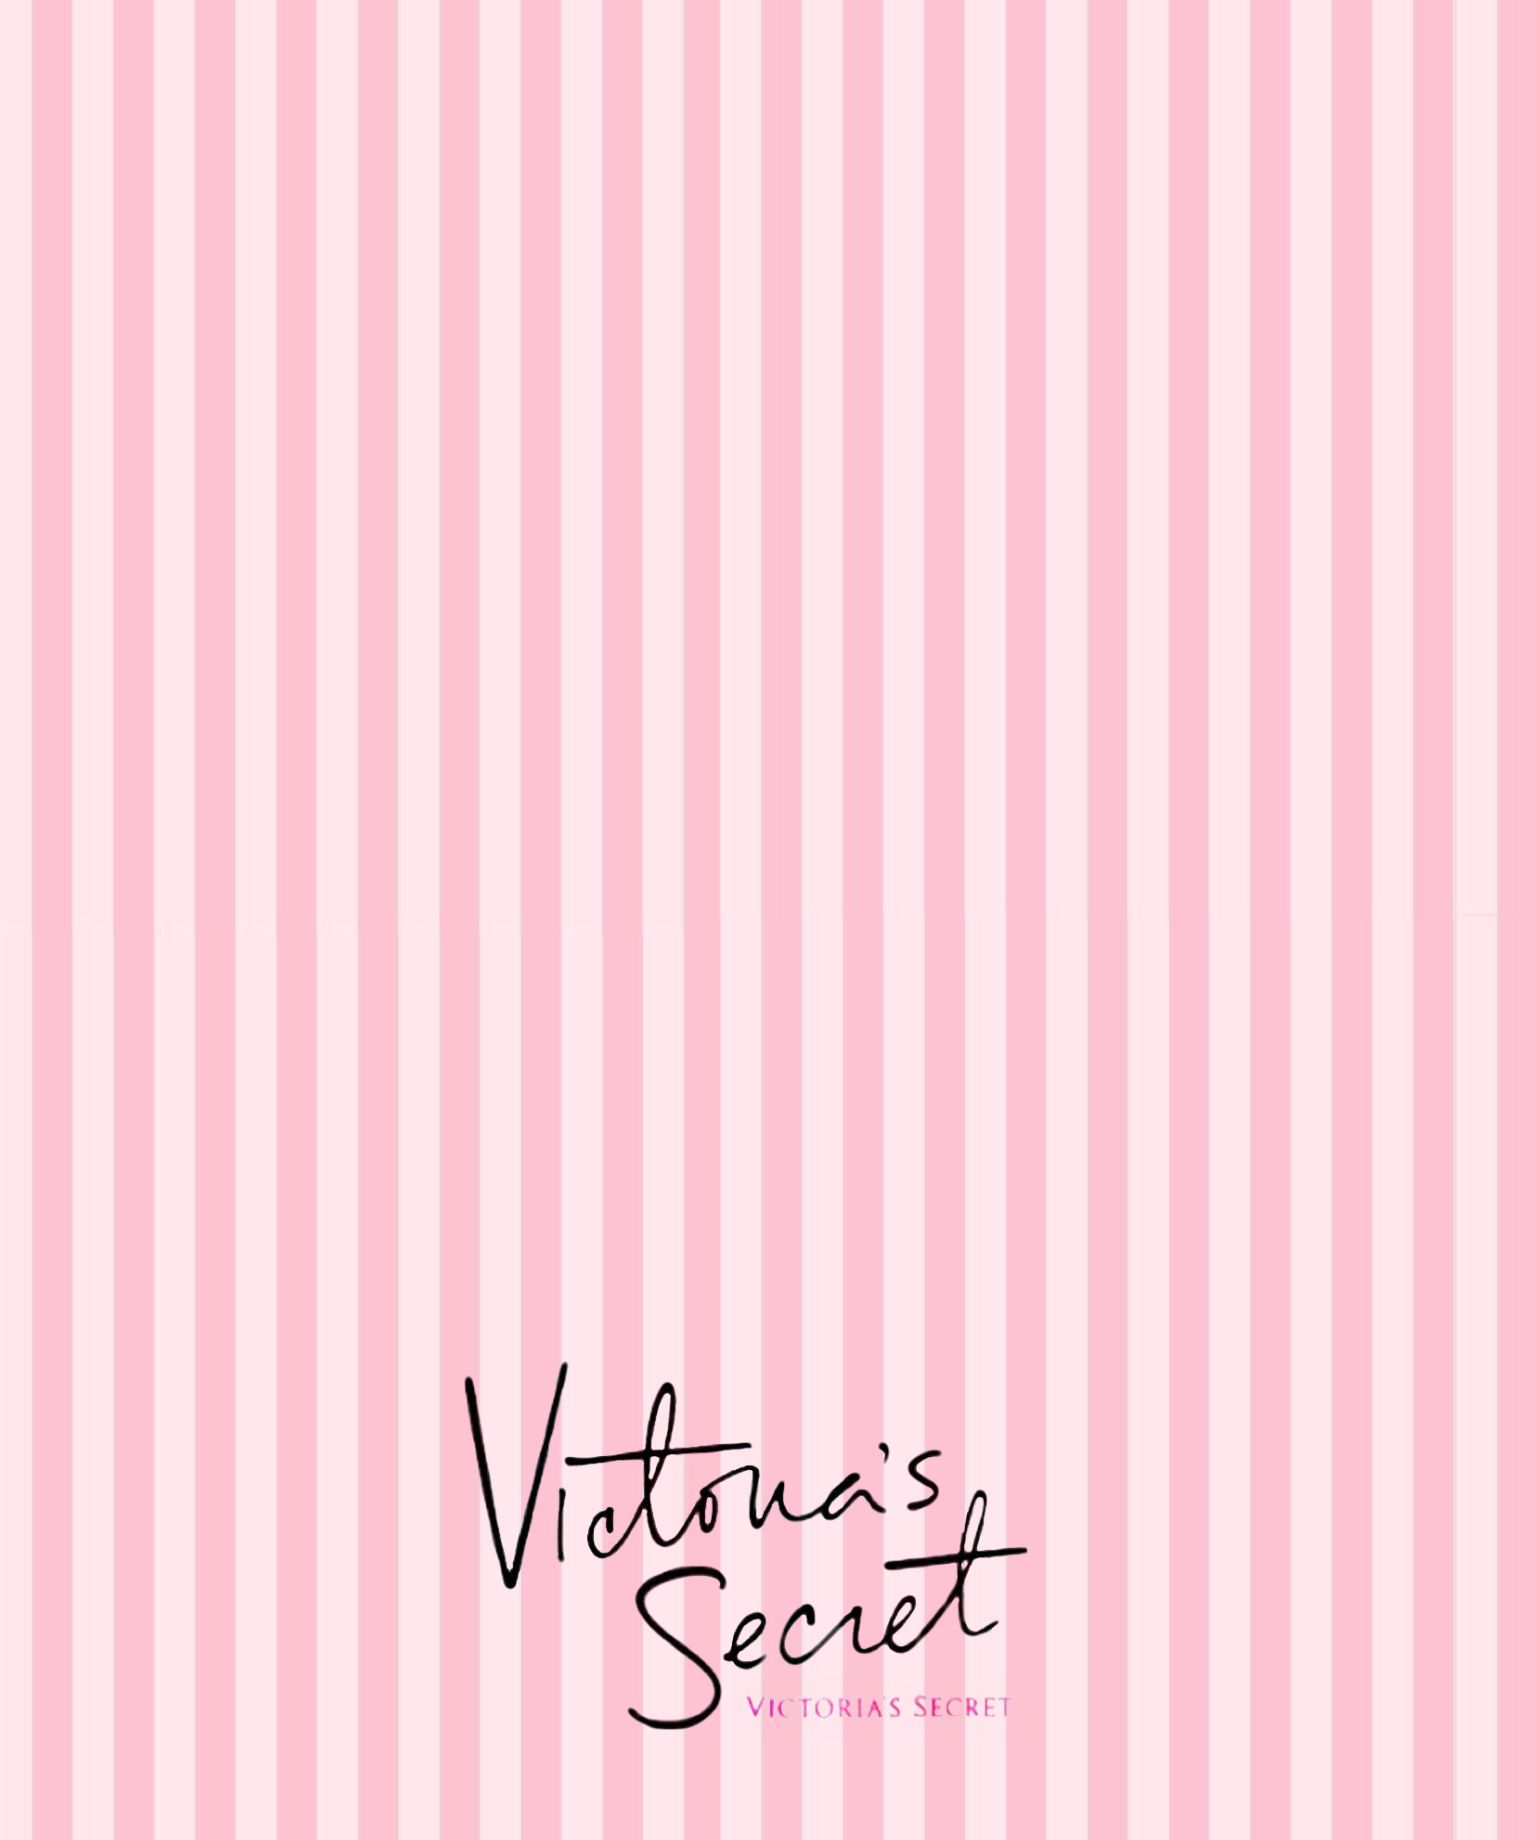 Victoria's Secret Wallpapers on